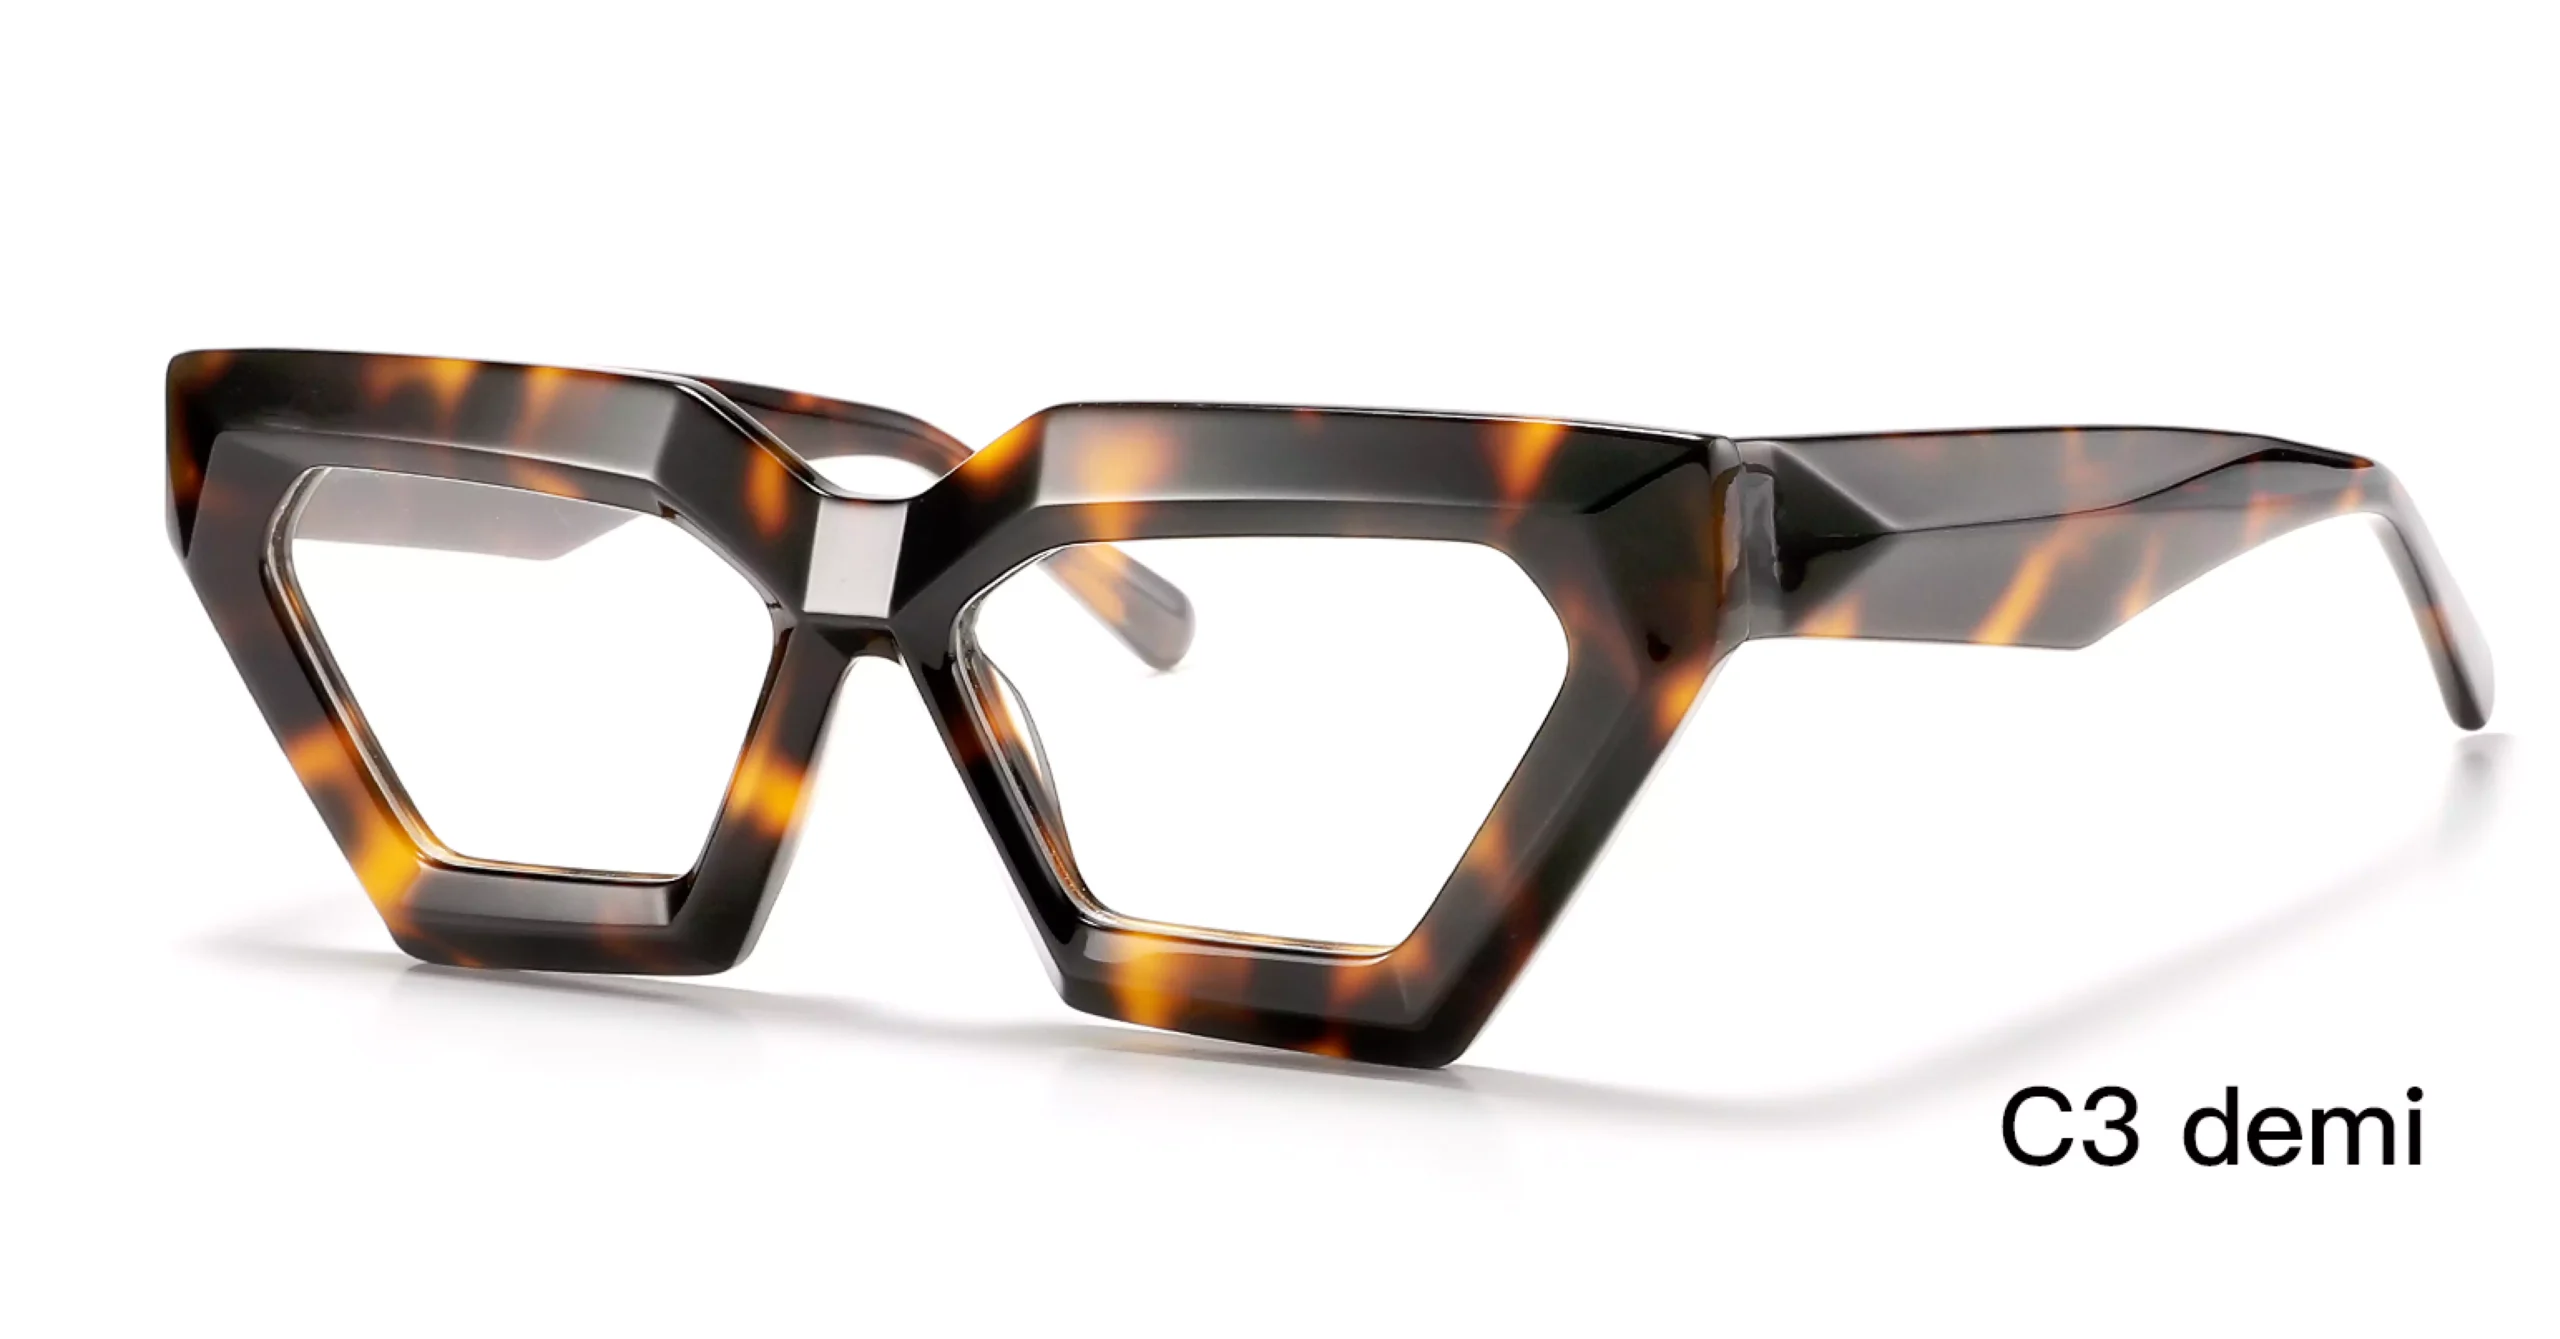 Hawksbill, trapezoidal frame, acetate, replica designer eyeglasses, made in China